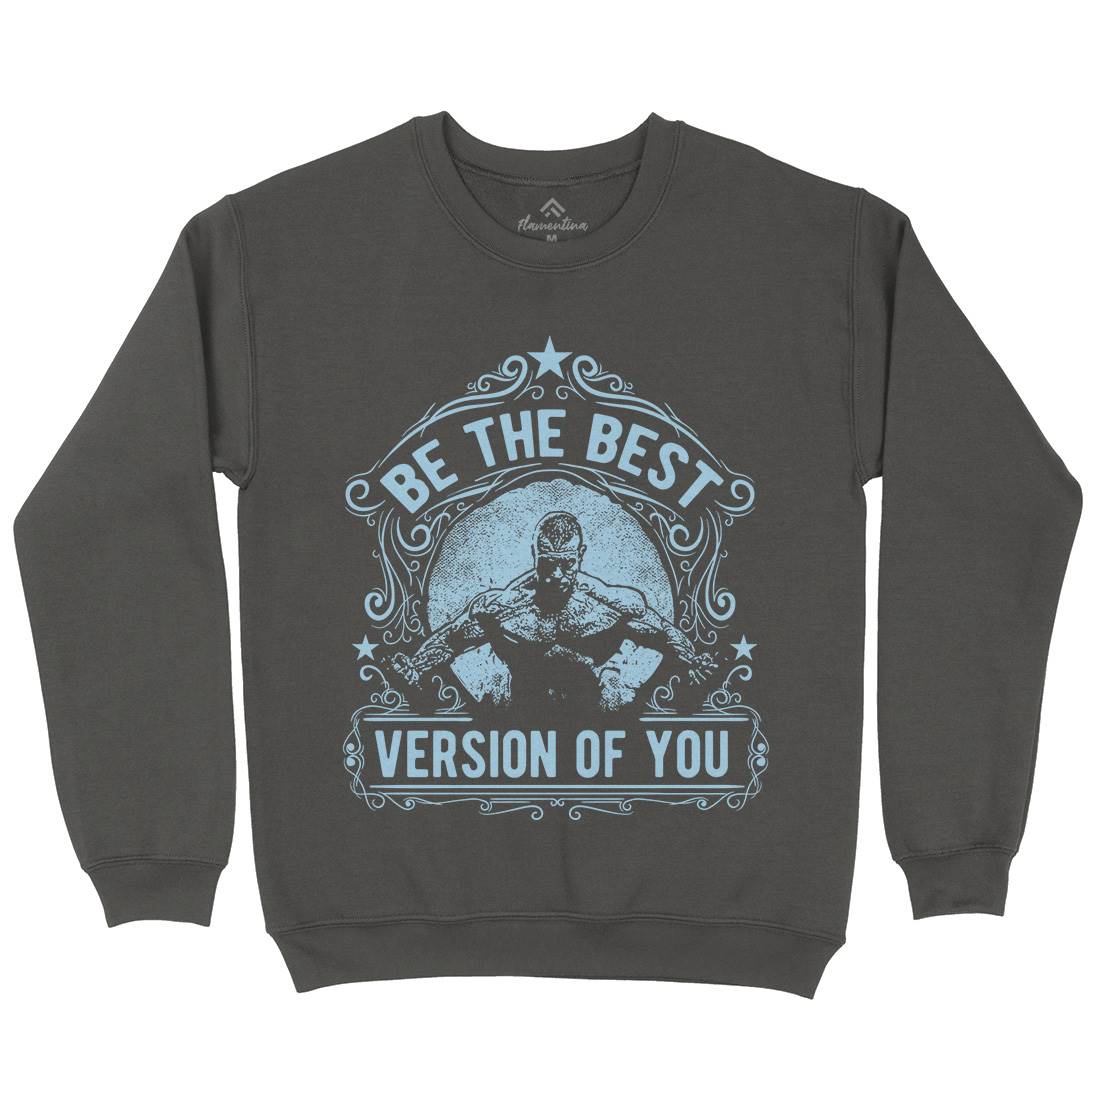 The Best Version Of You Kids Crew Neck Sweatshirt Gym C985